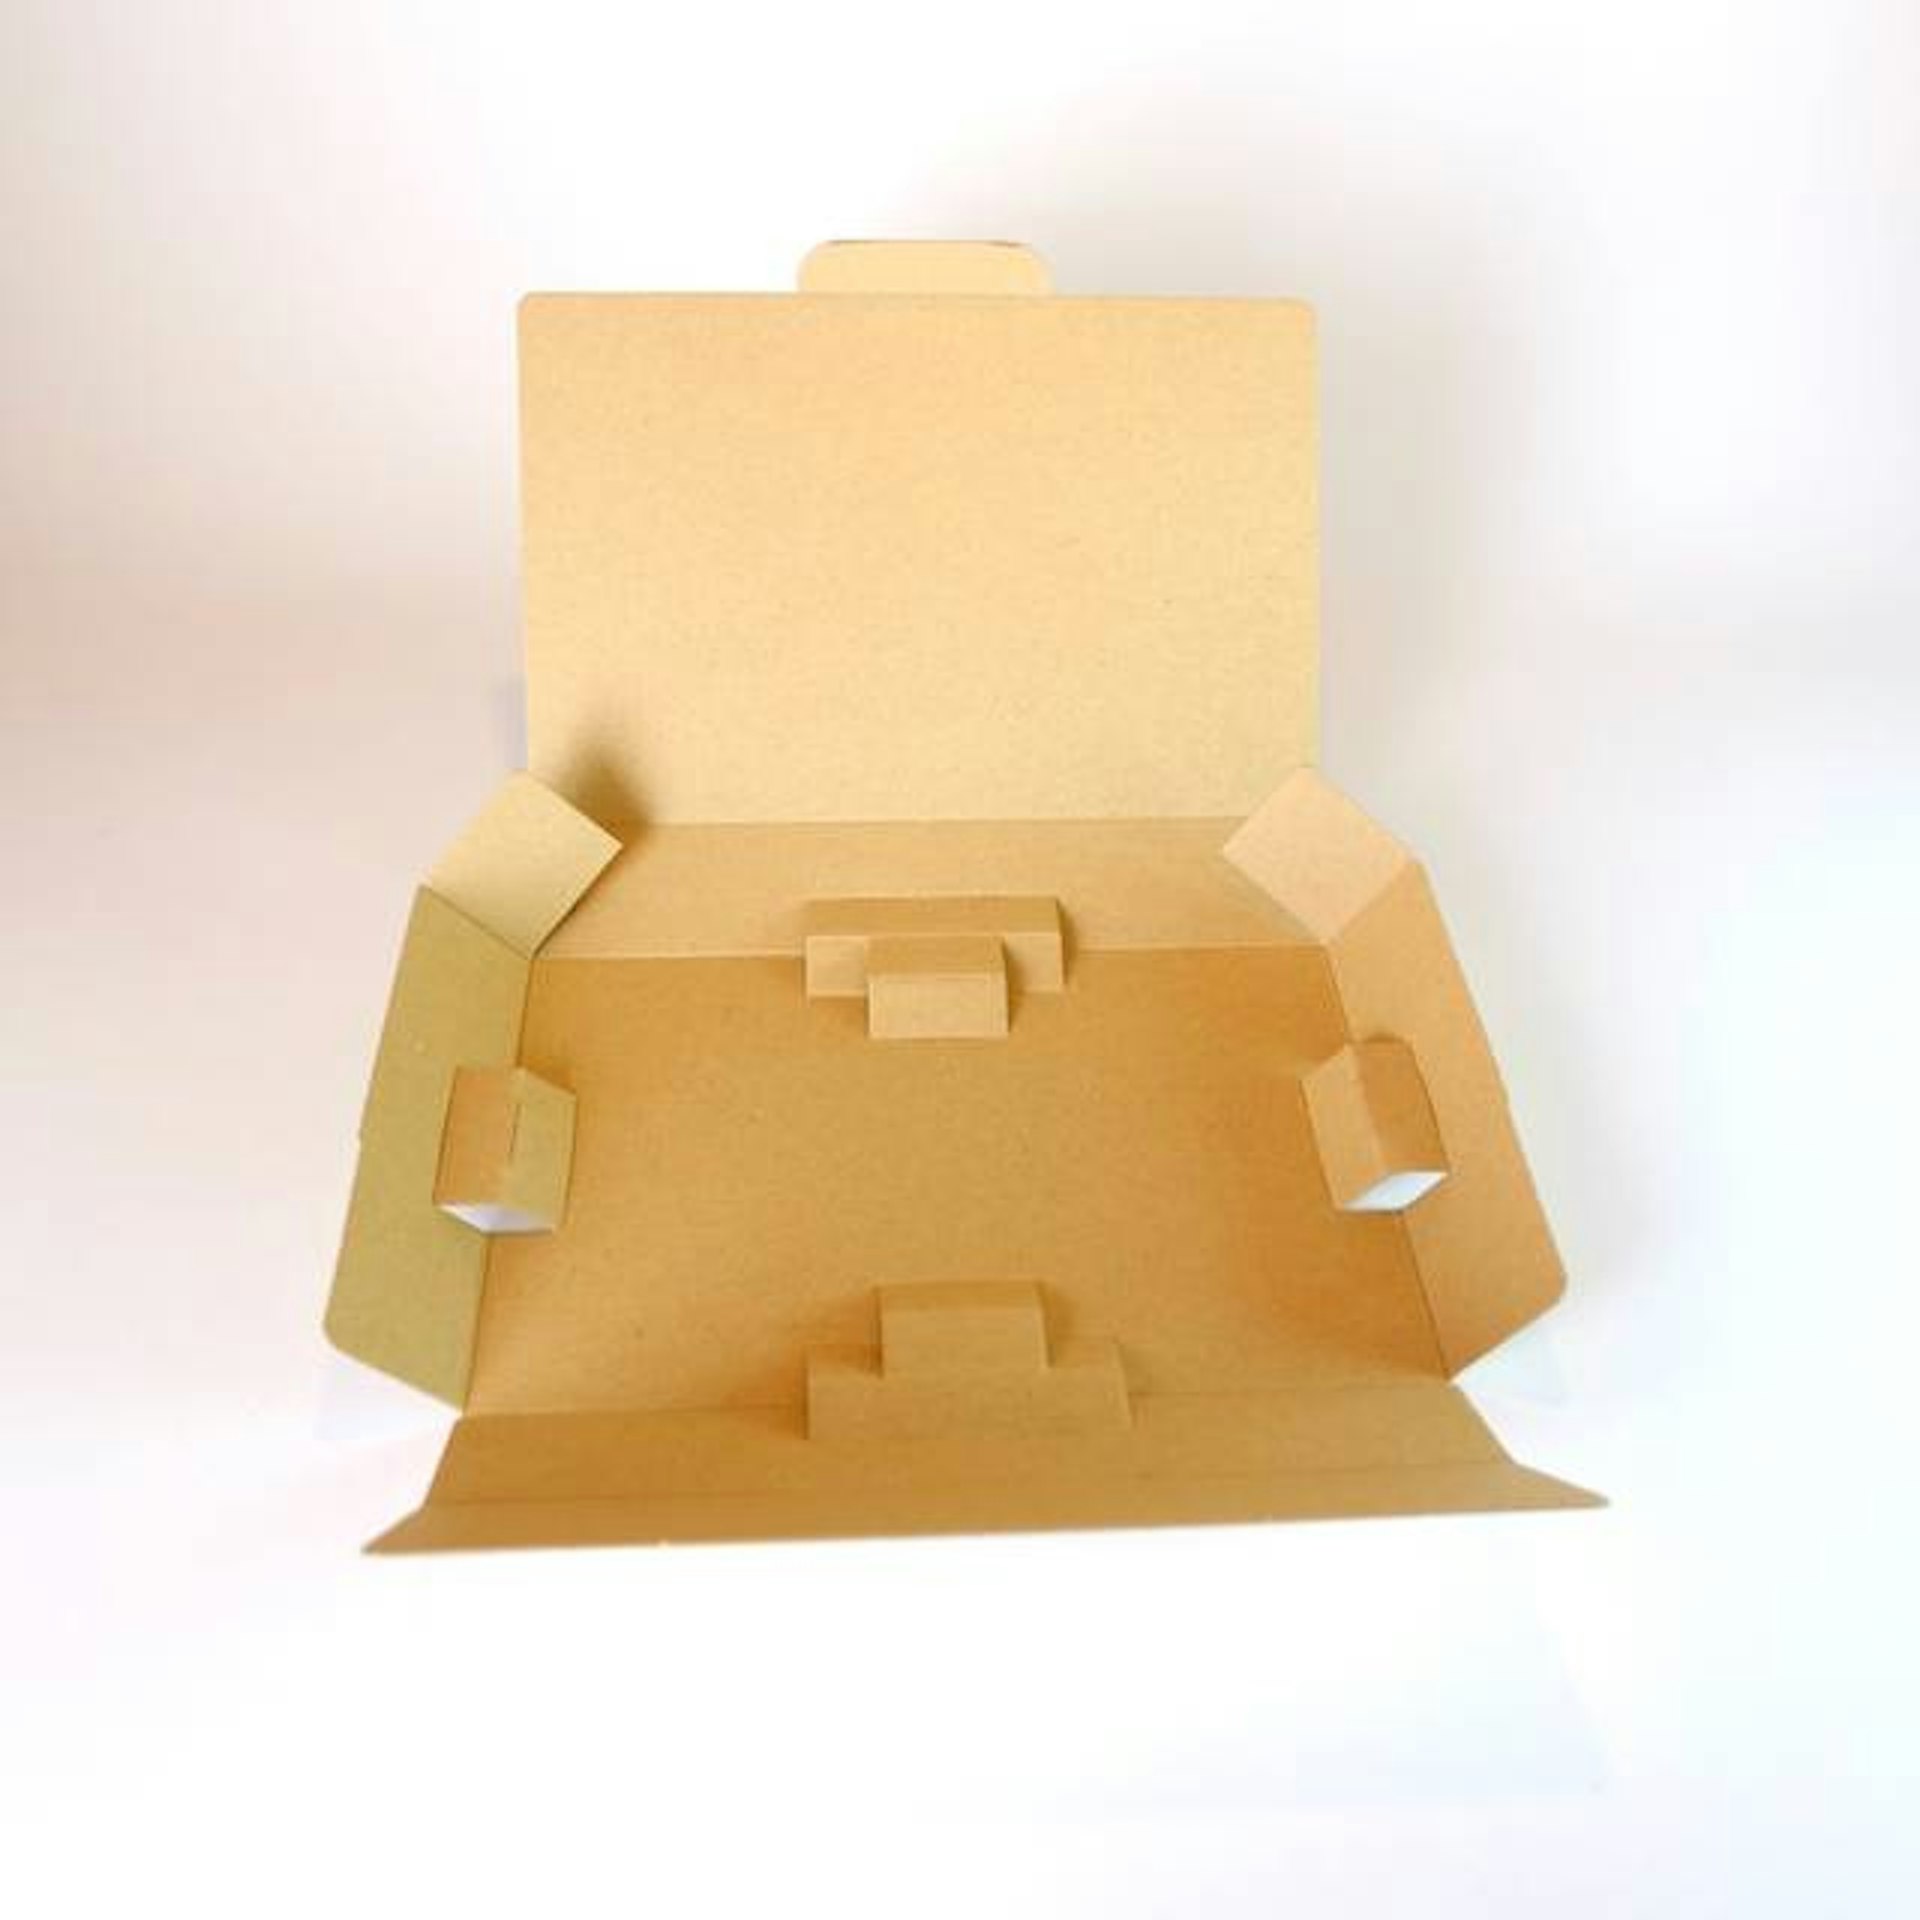 Packing box (honyapac No. 1)